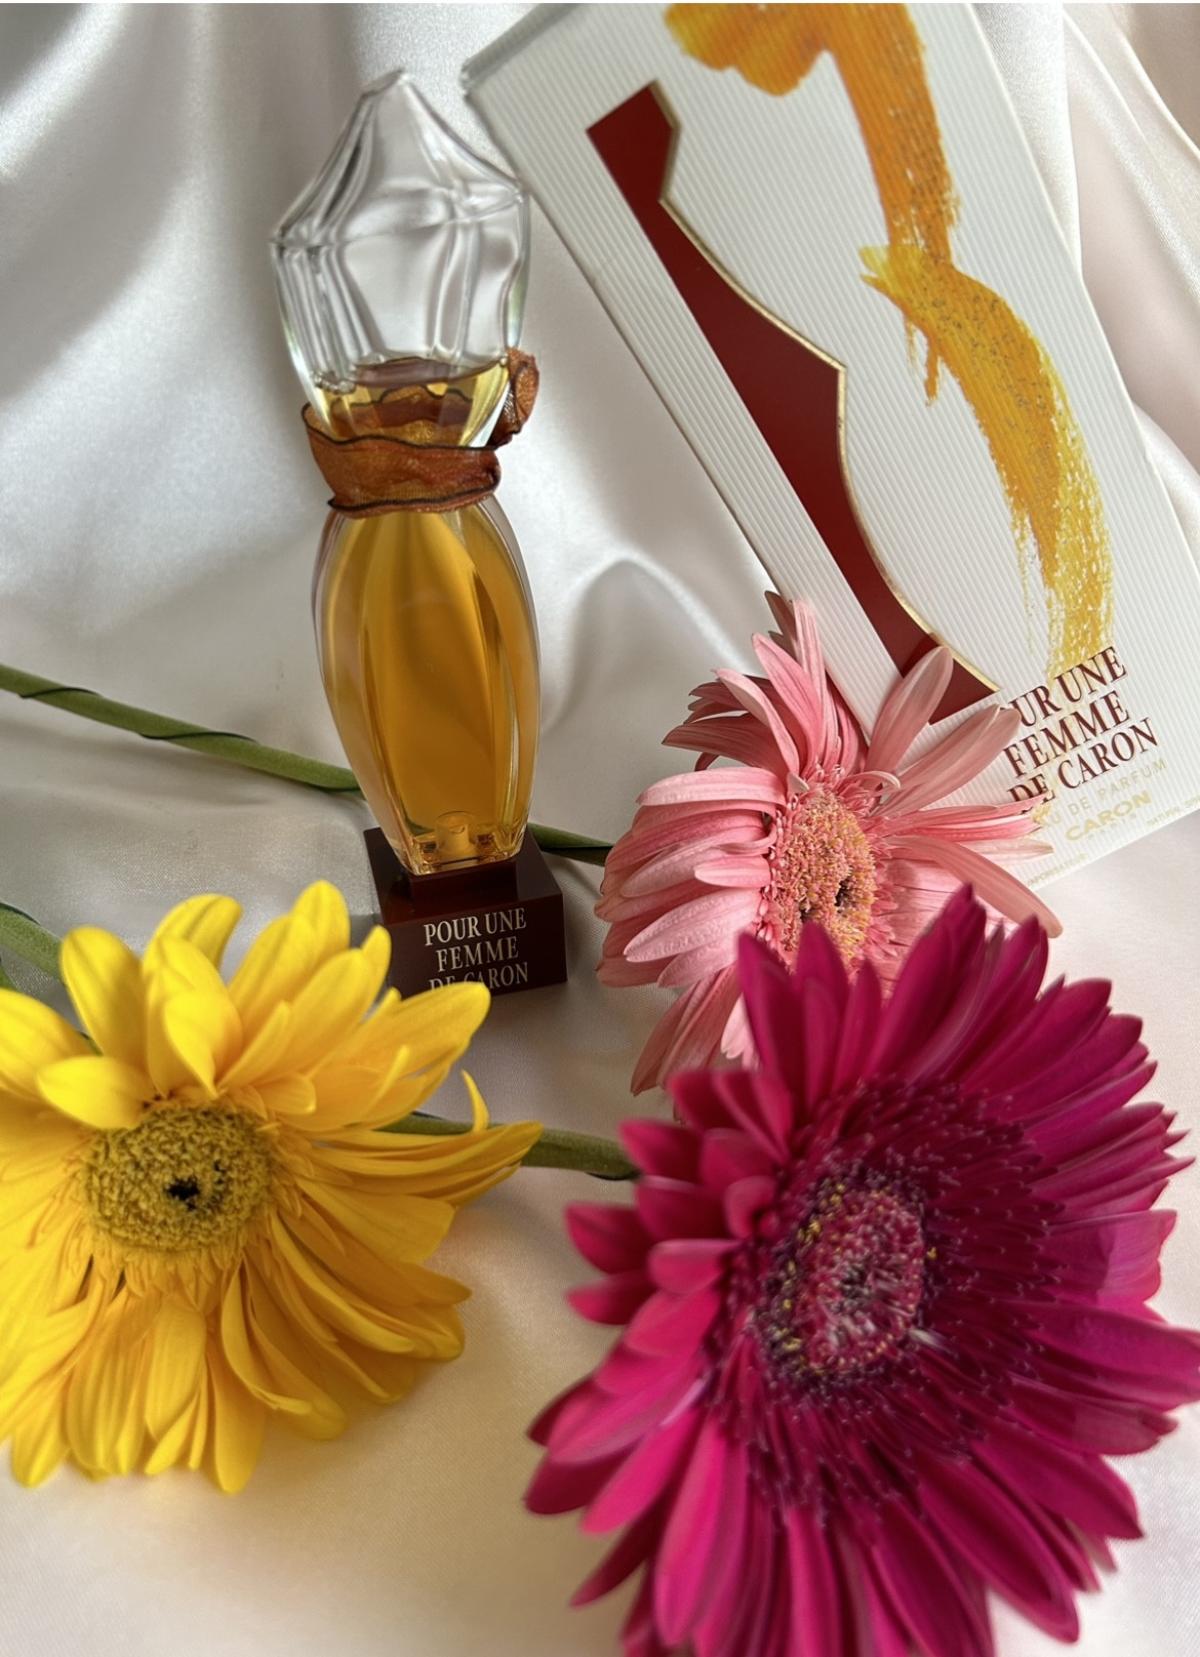 Pour Une Femme de Caron Caron perfume - a fragrance for women 2001